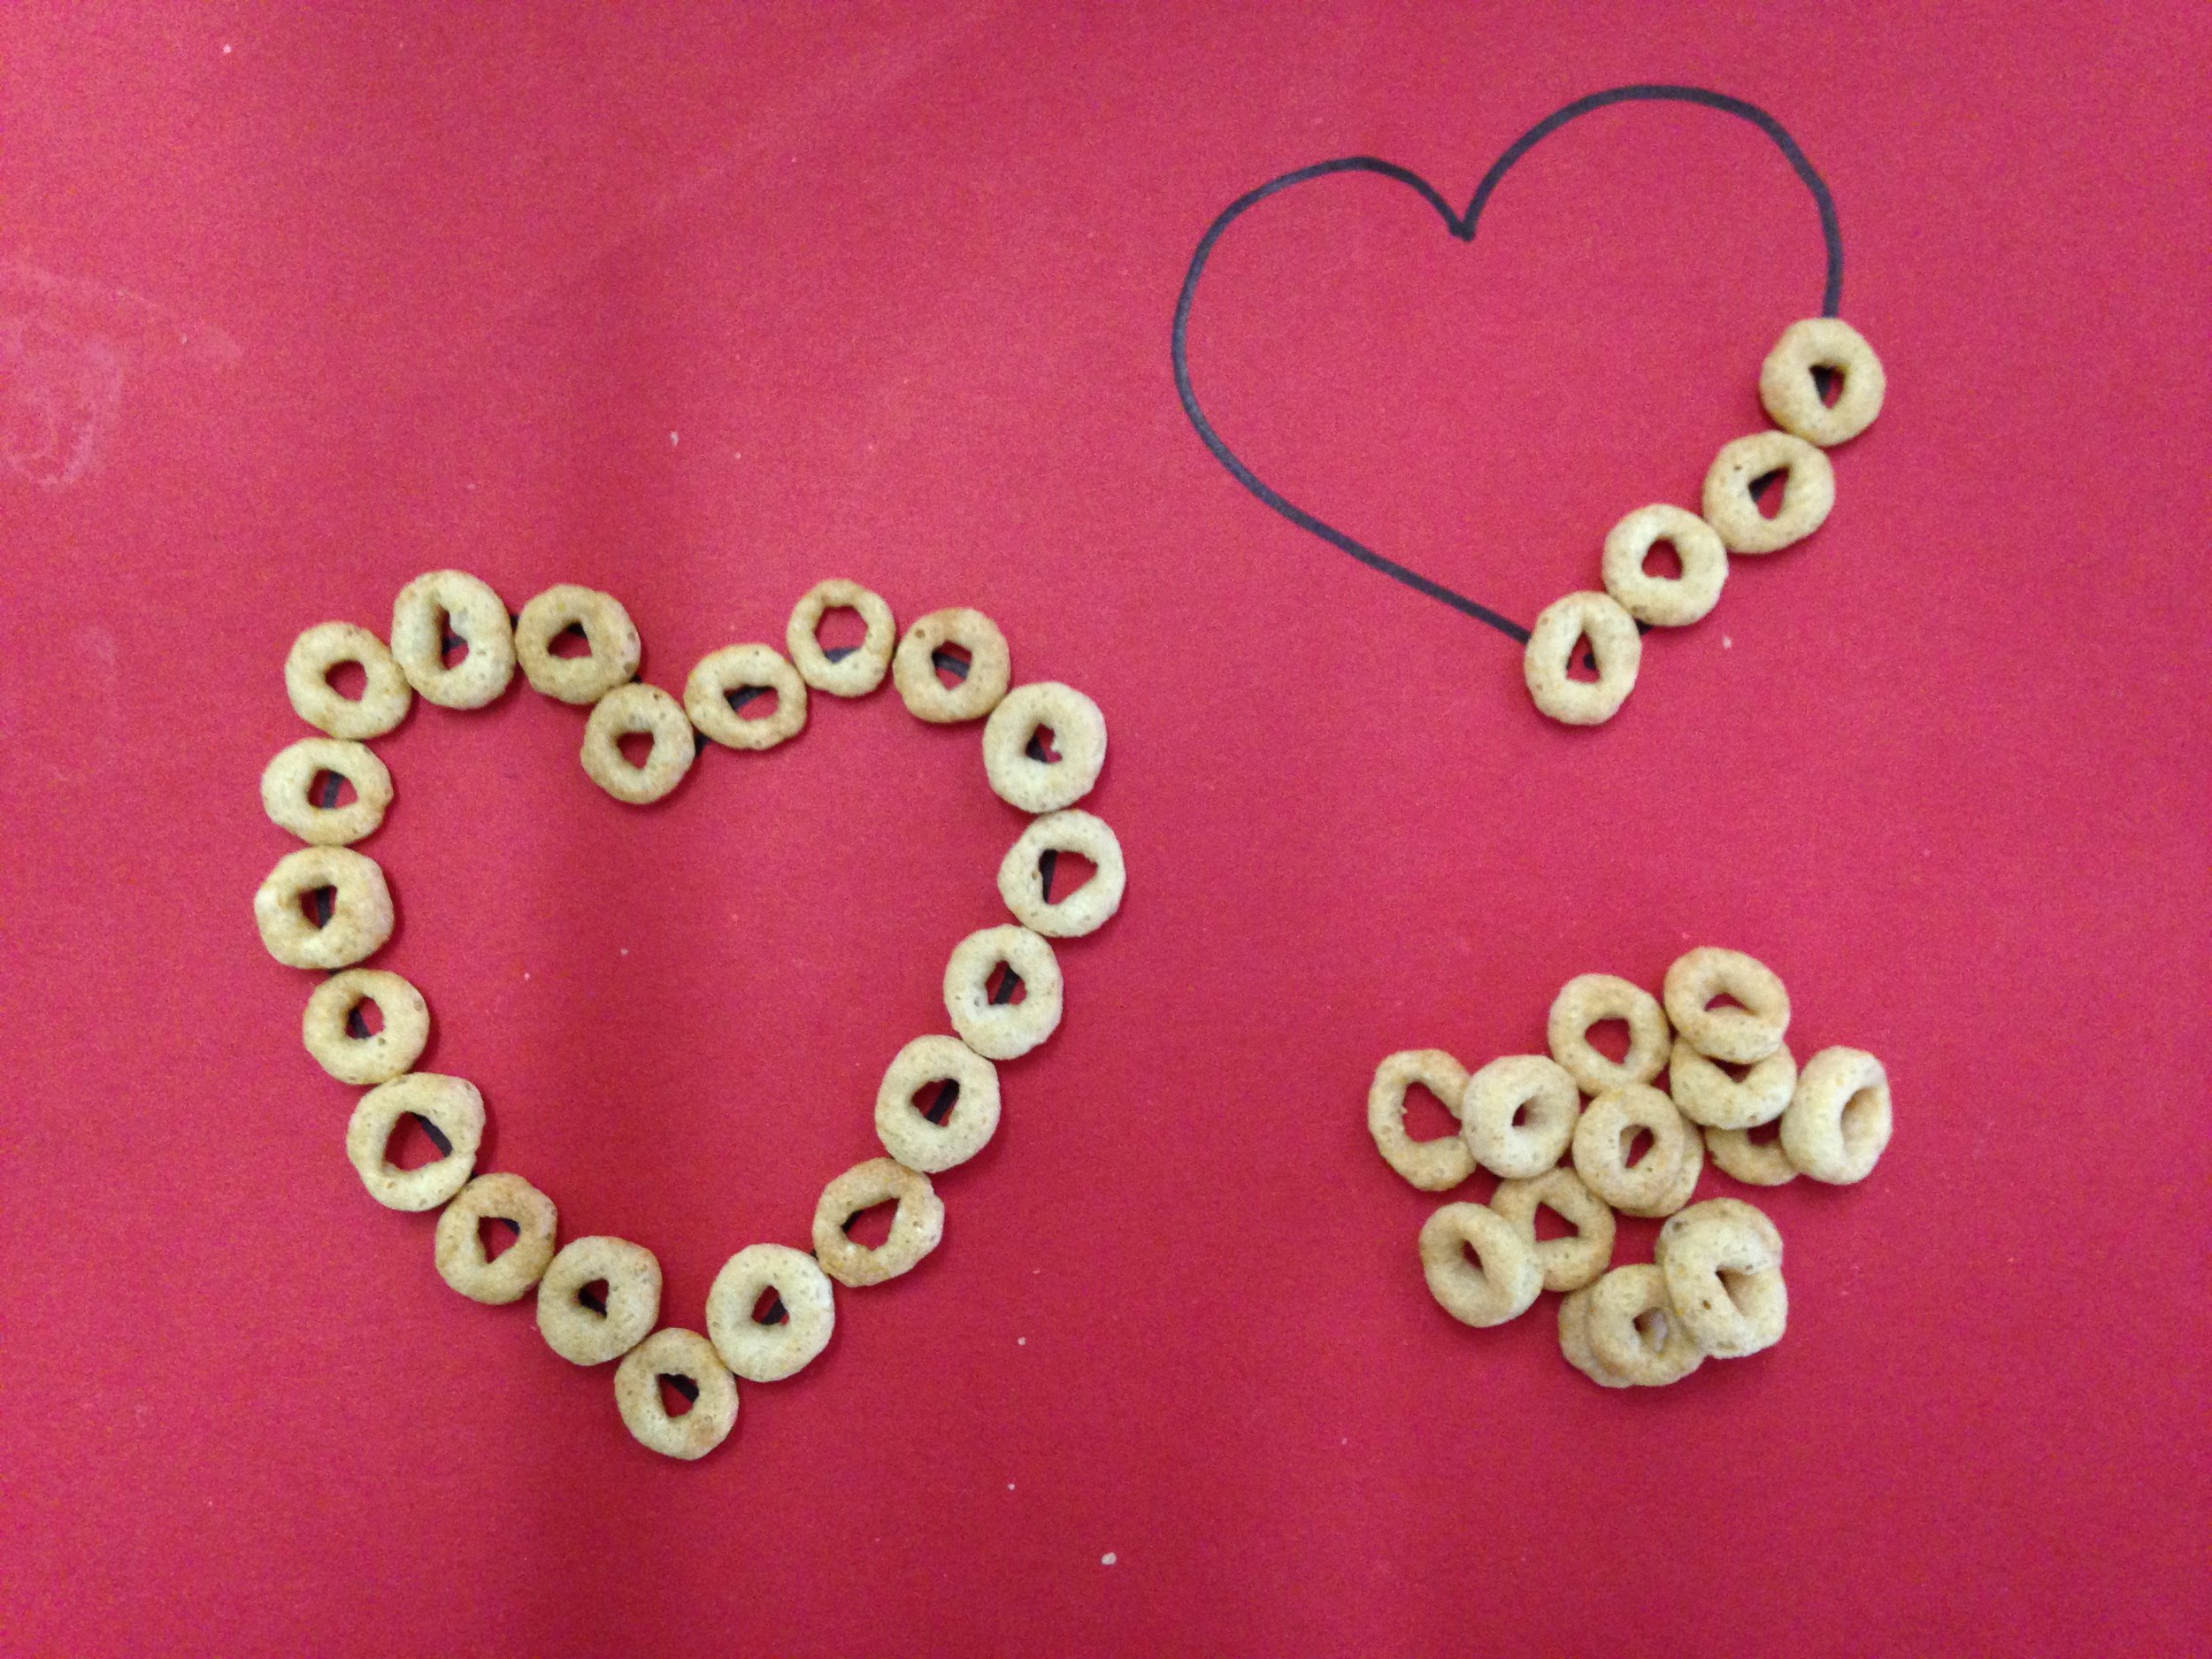 Gluing cheerios on a heart outline